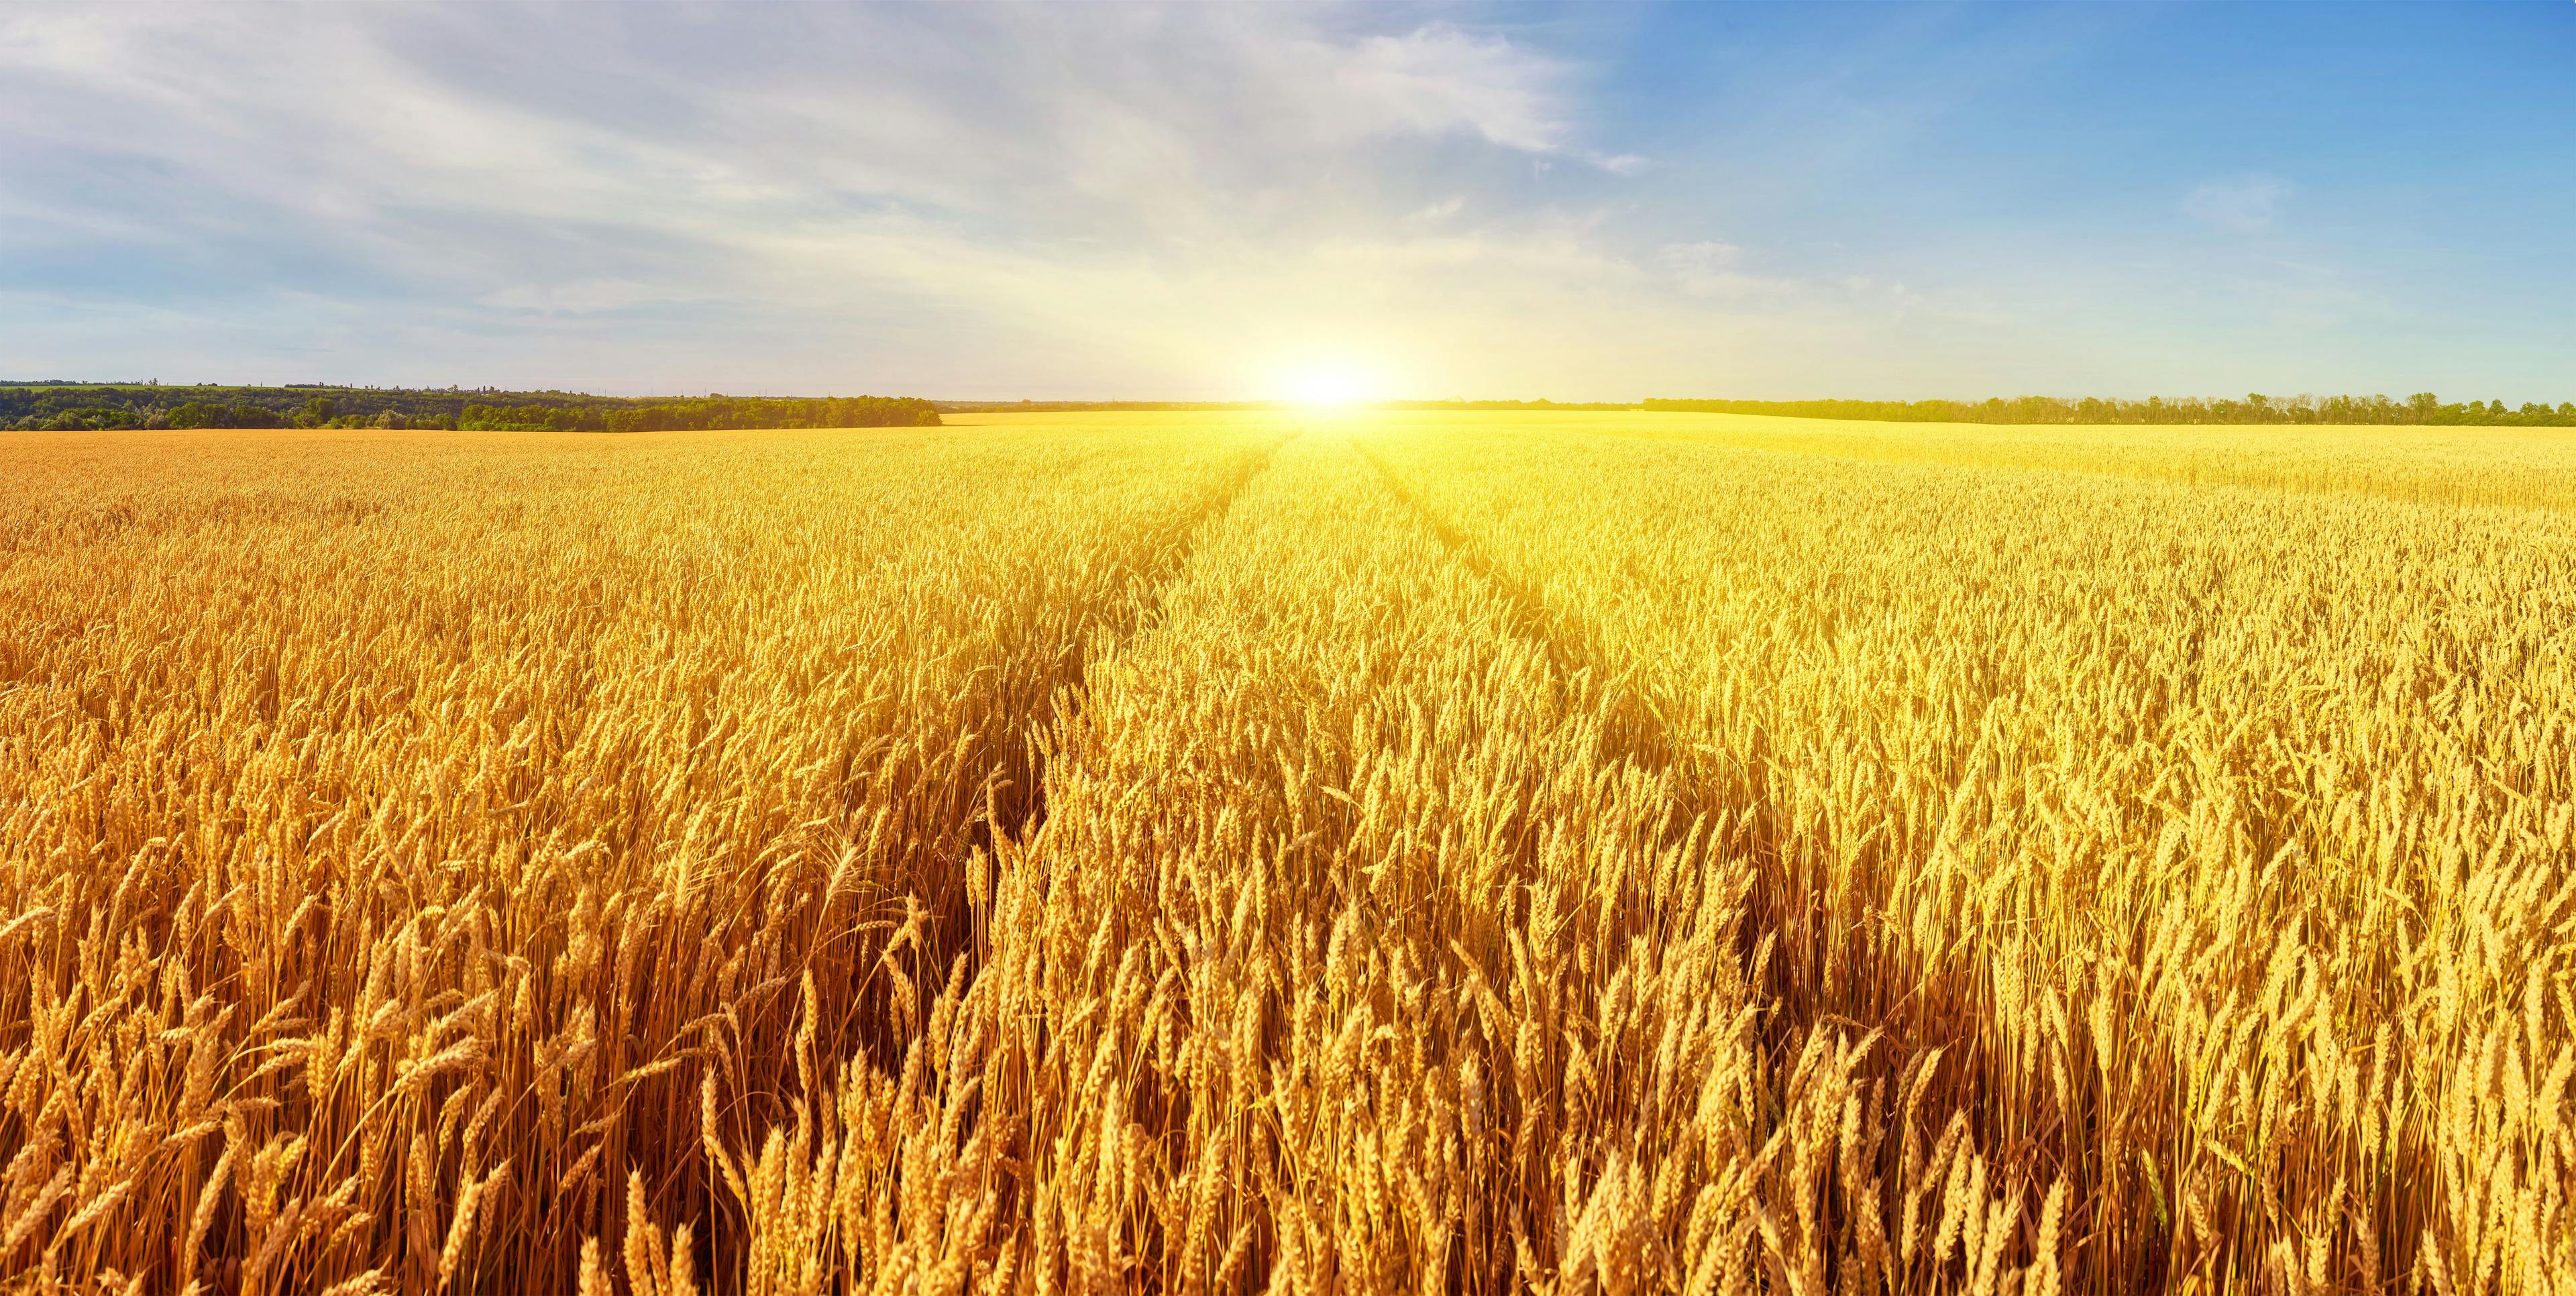 Landscape with tractor road in wheat field | Image Credit: © Ryzhkov Oleksandr - stock.adobe.com